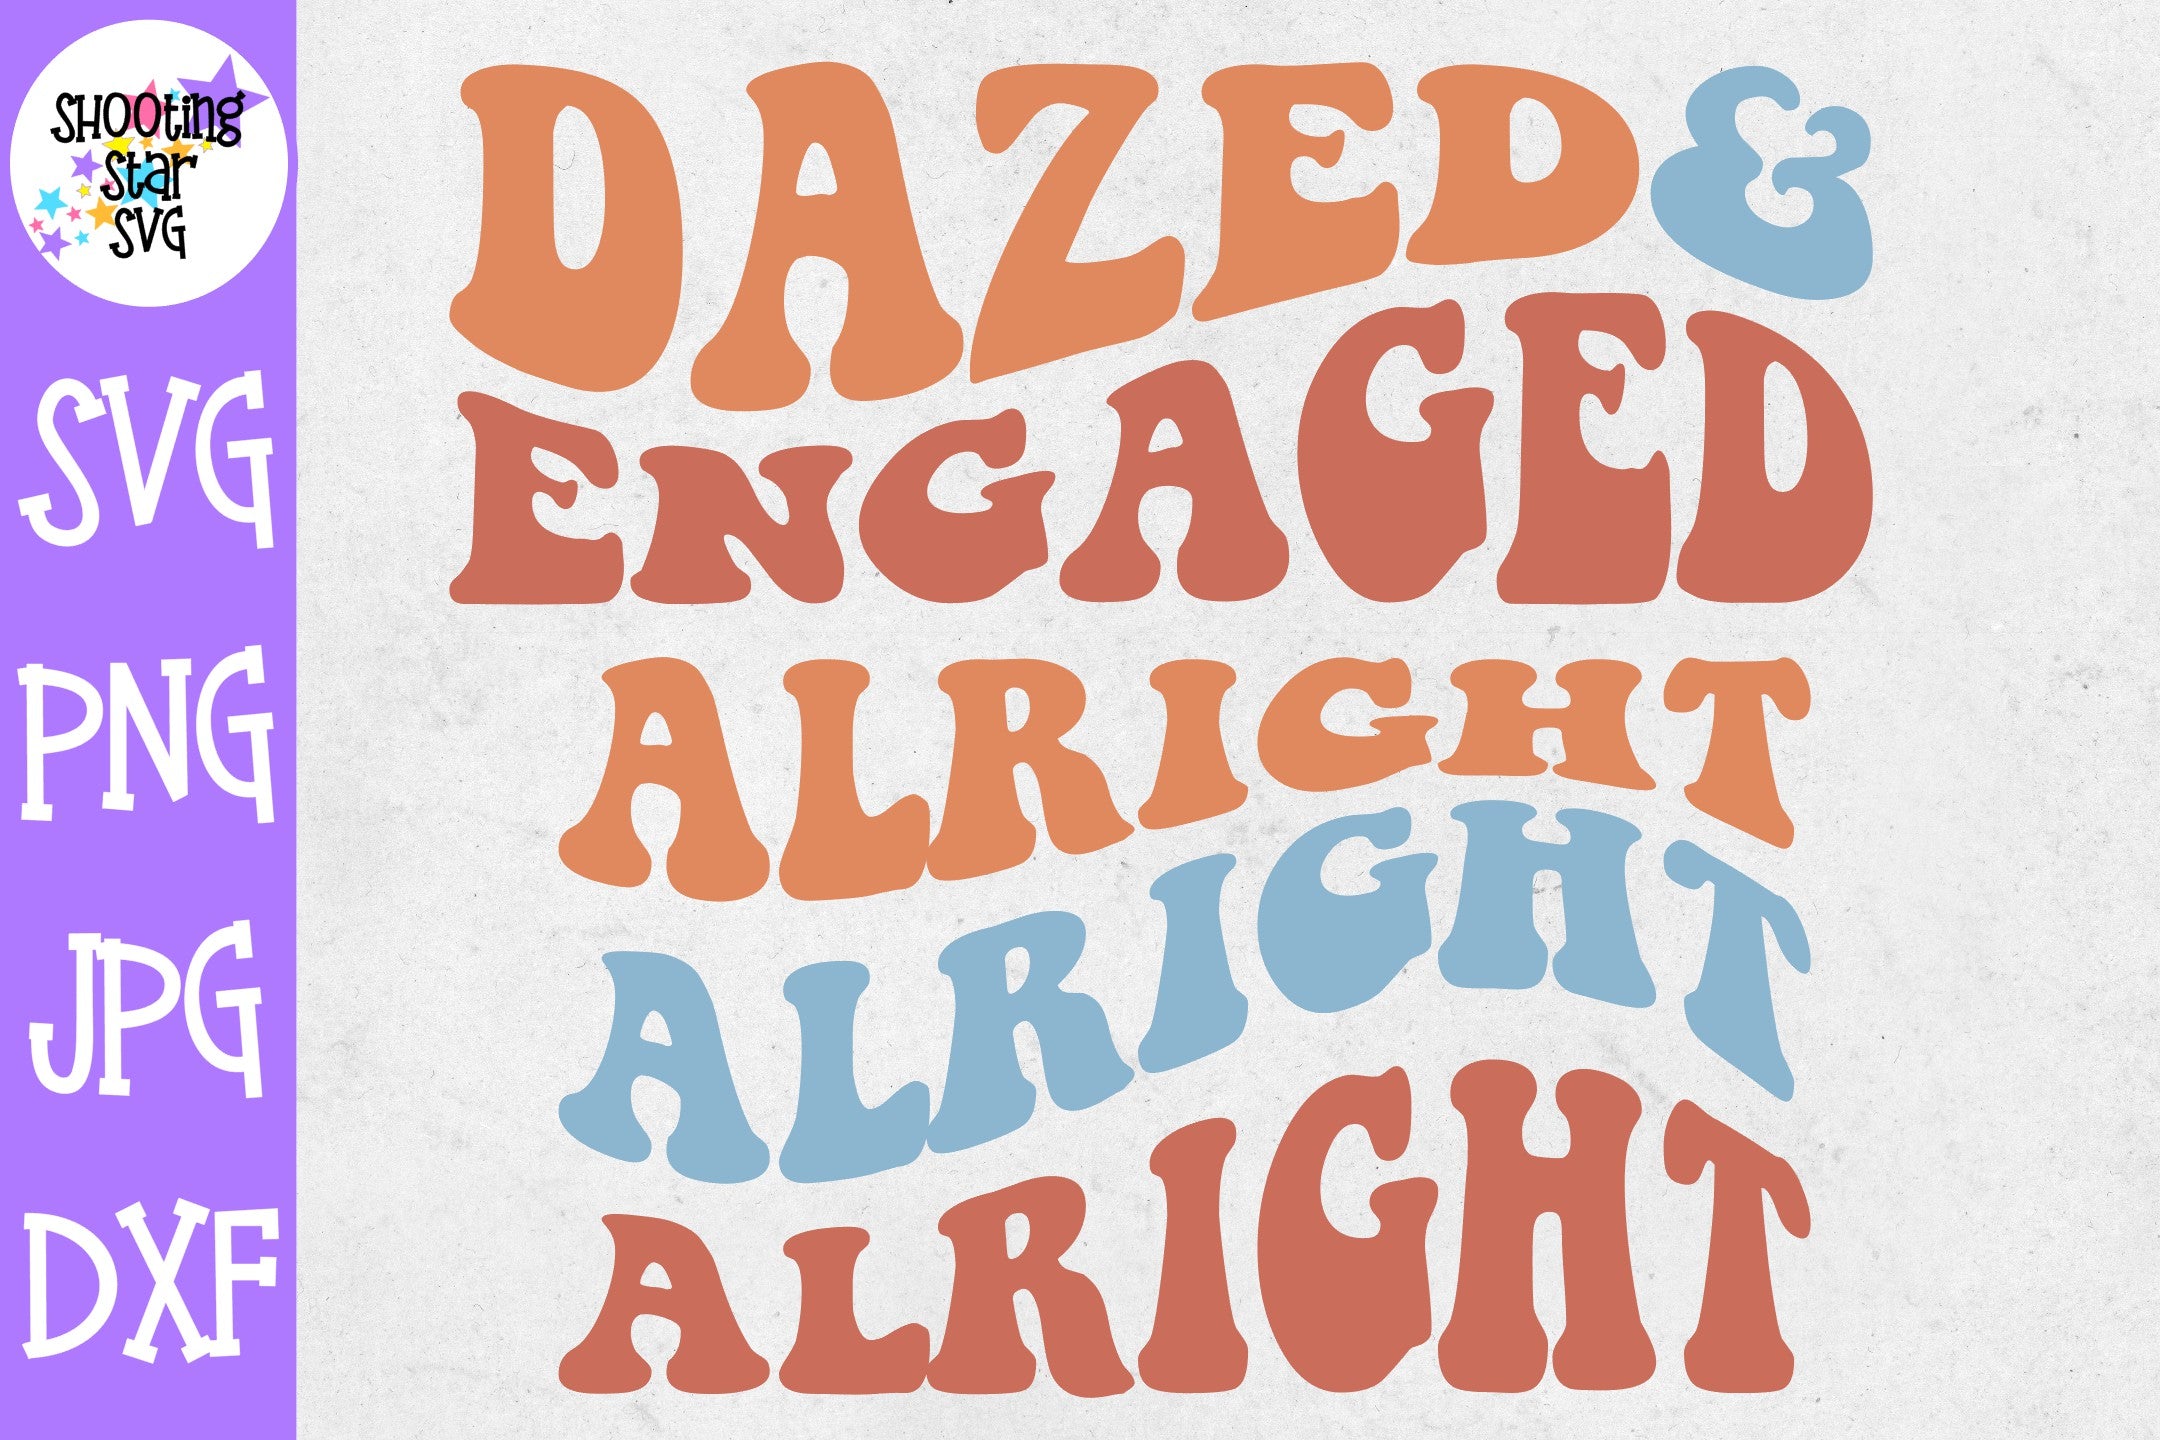 Dazed and Engaged SVG - Retro Bride SVG - Alright Alright Alright SVG